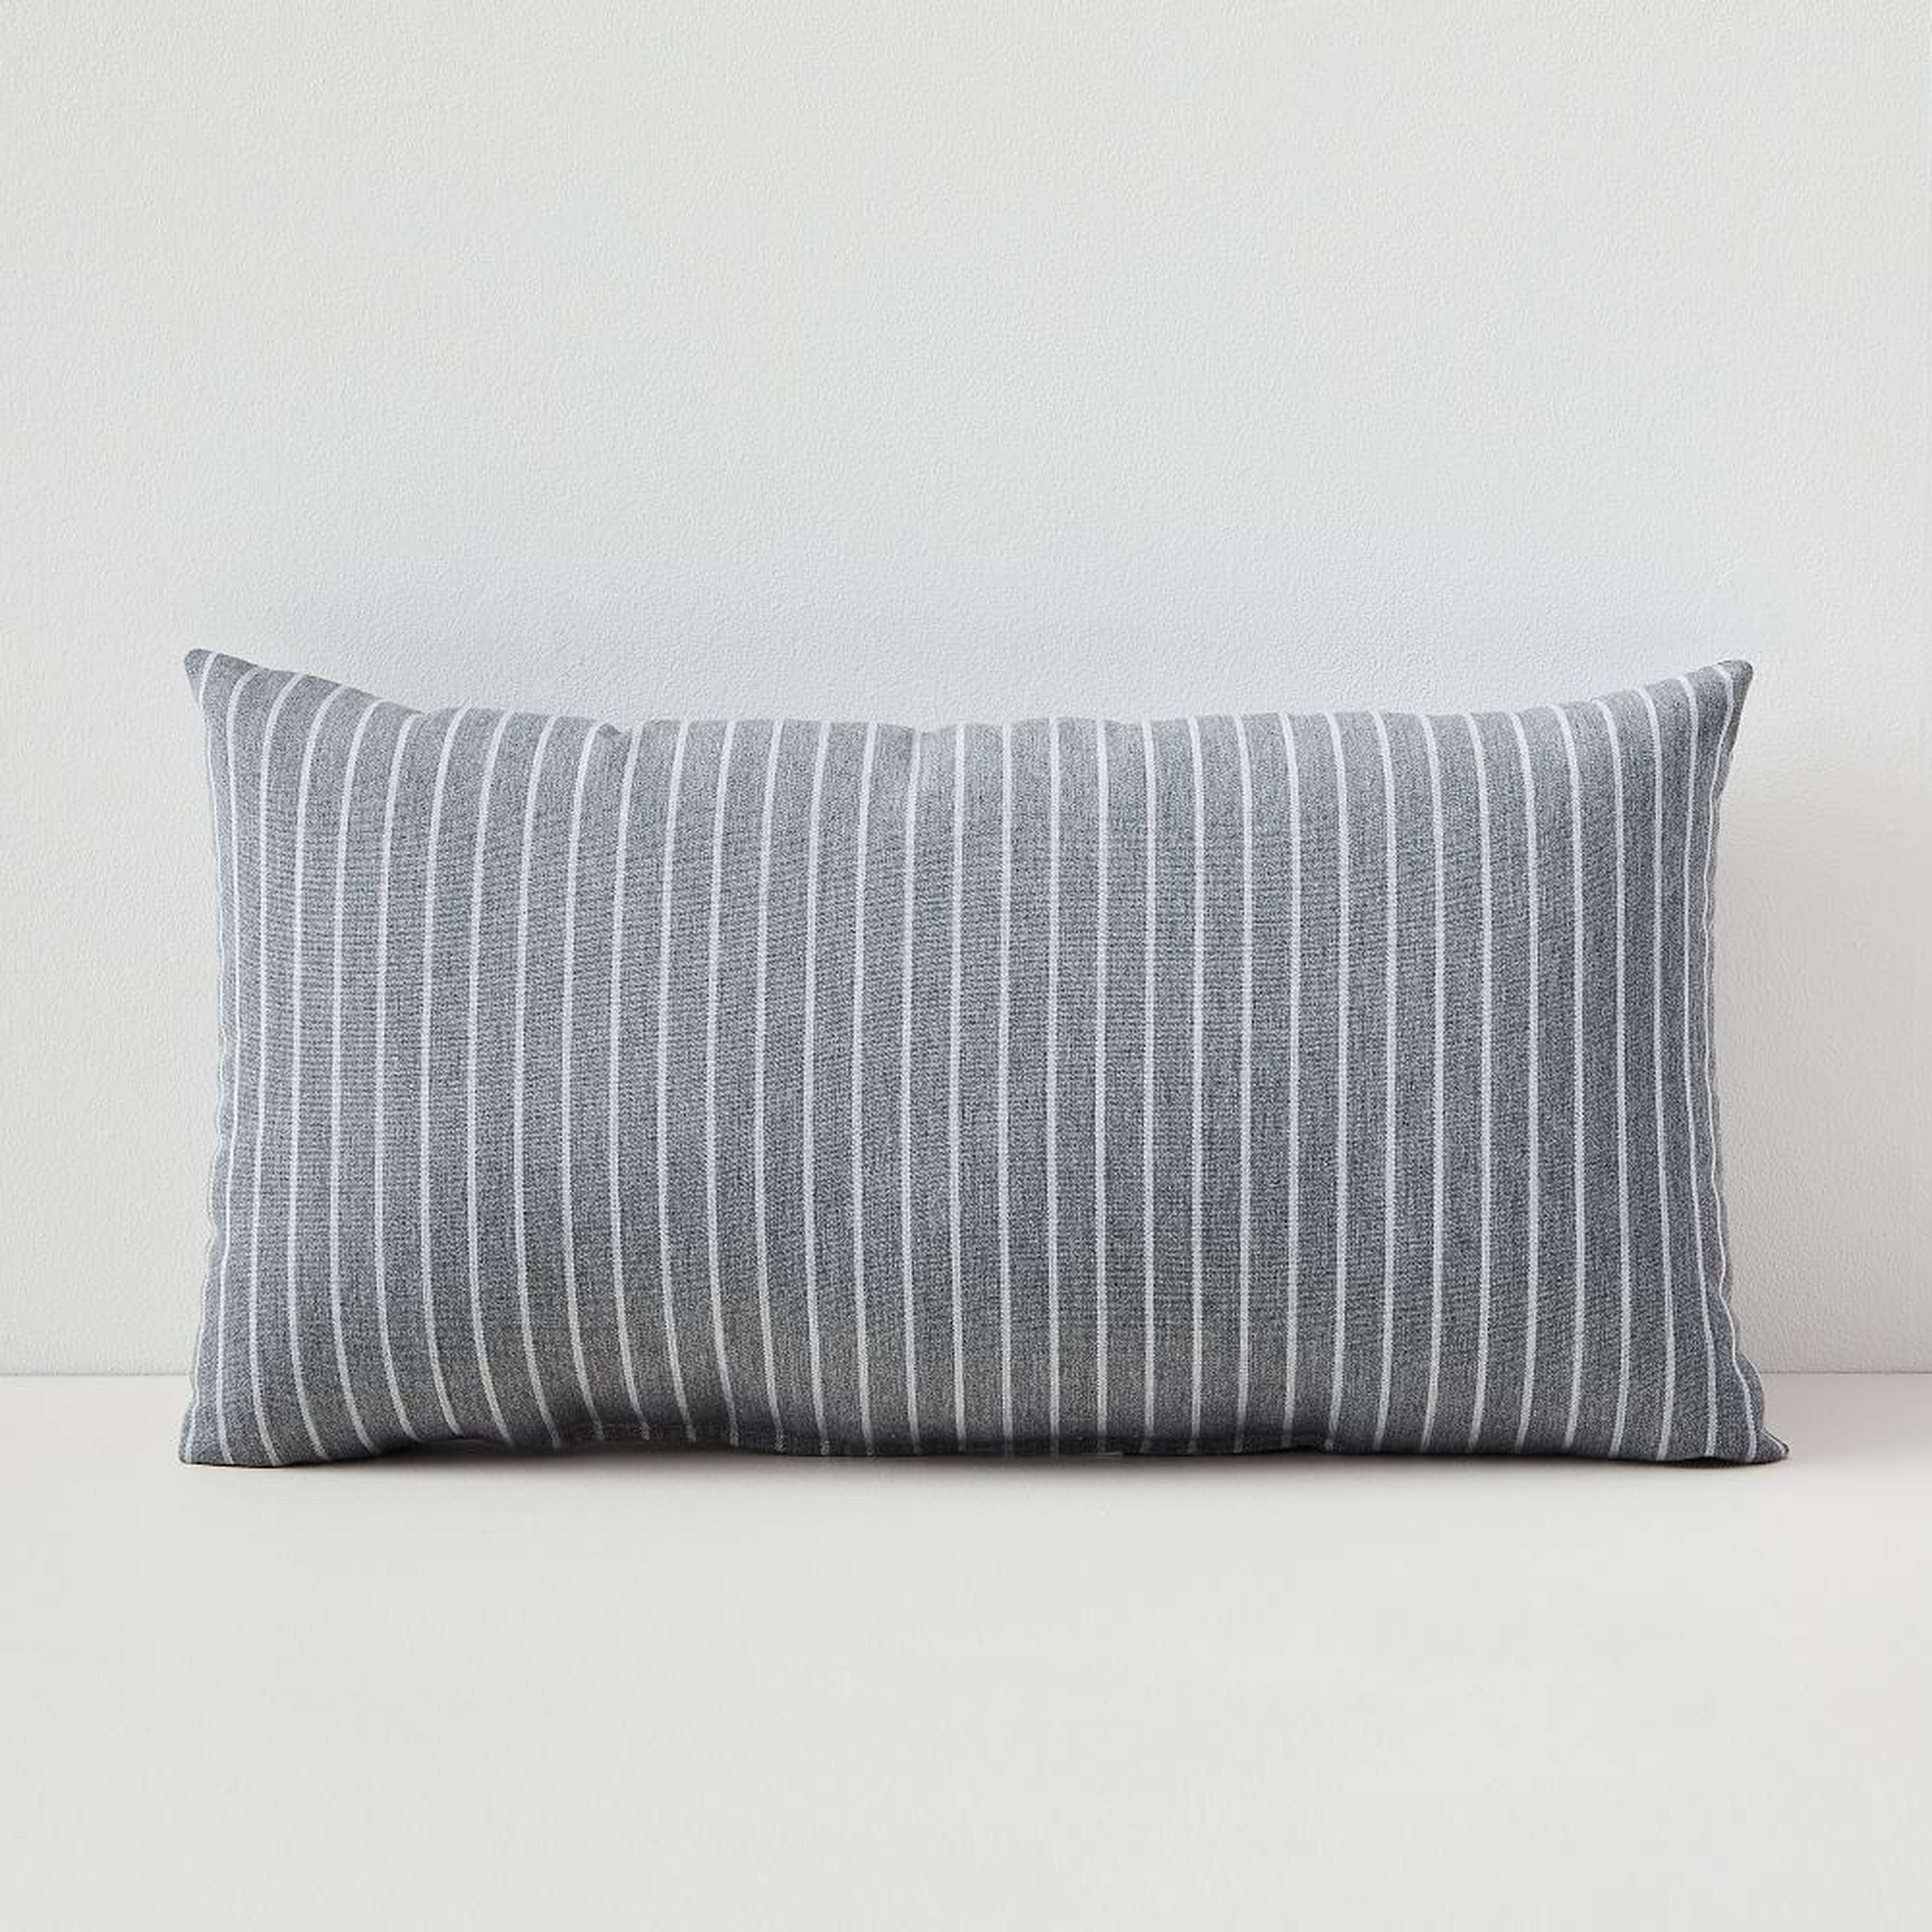 Sunbrella Indoor/Outdoor Striped Lumbar Pillow, Smoke, 12"x21" - West Elm